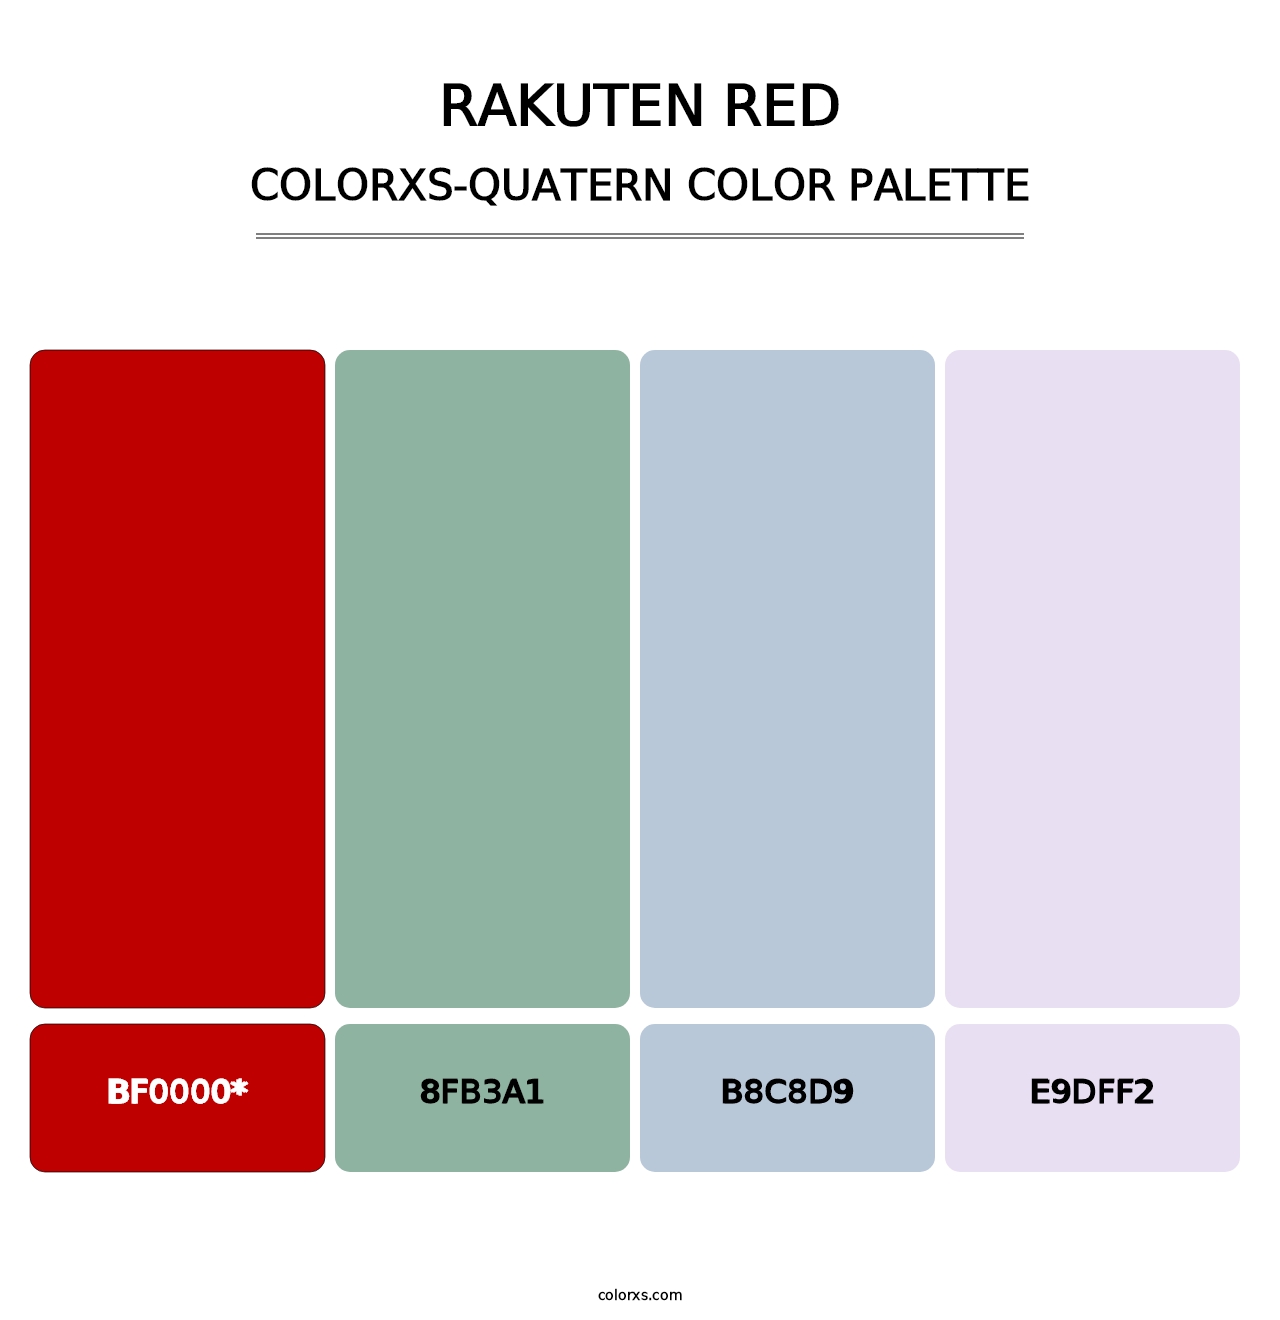 Rakuten Red - Colorxs Quatern Palette